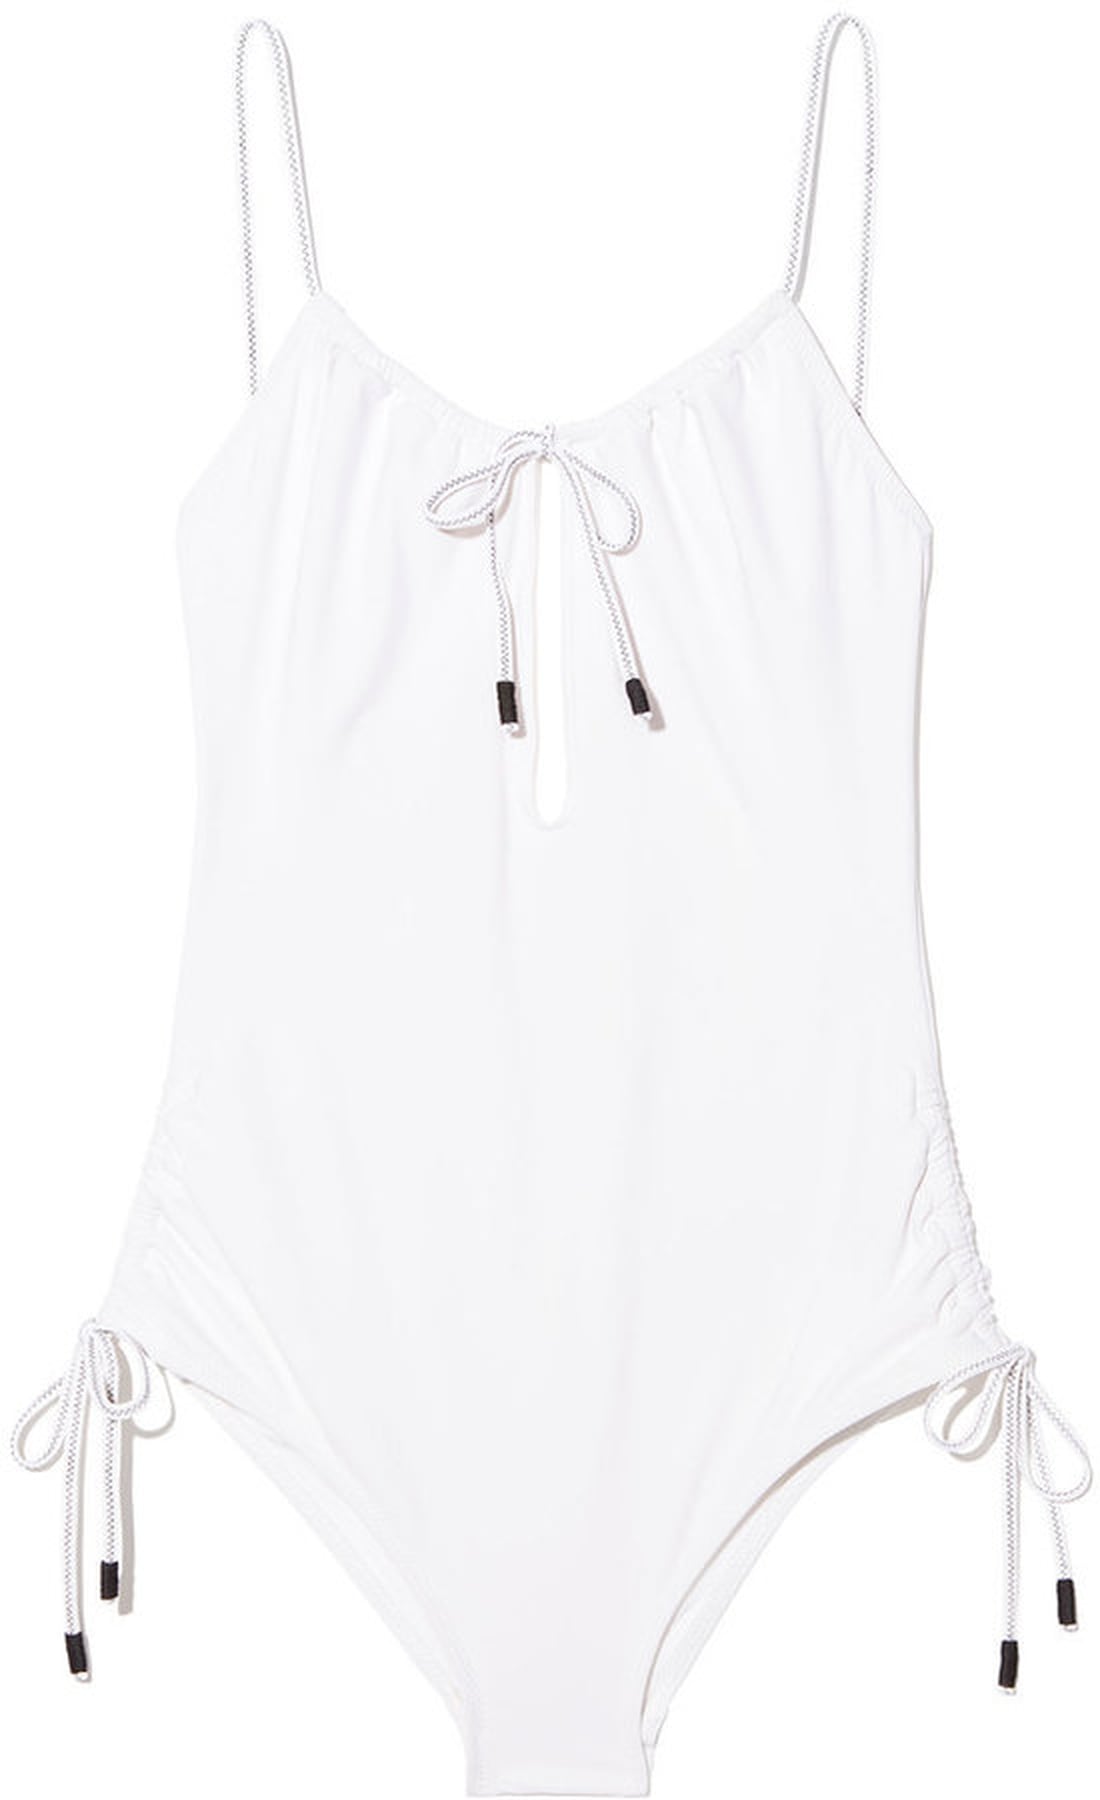 Candice Swanepoel's White One-Piece Swimsuit | POPSUGAR Fashion